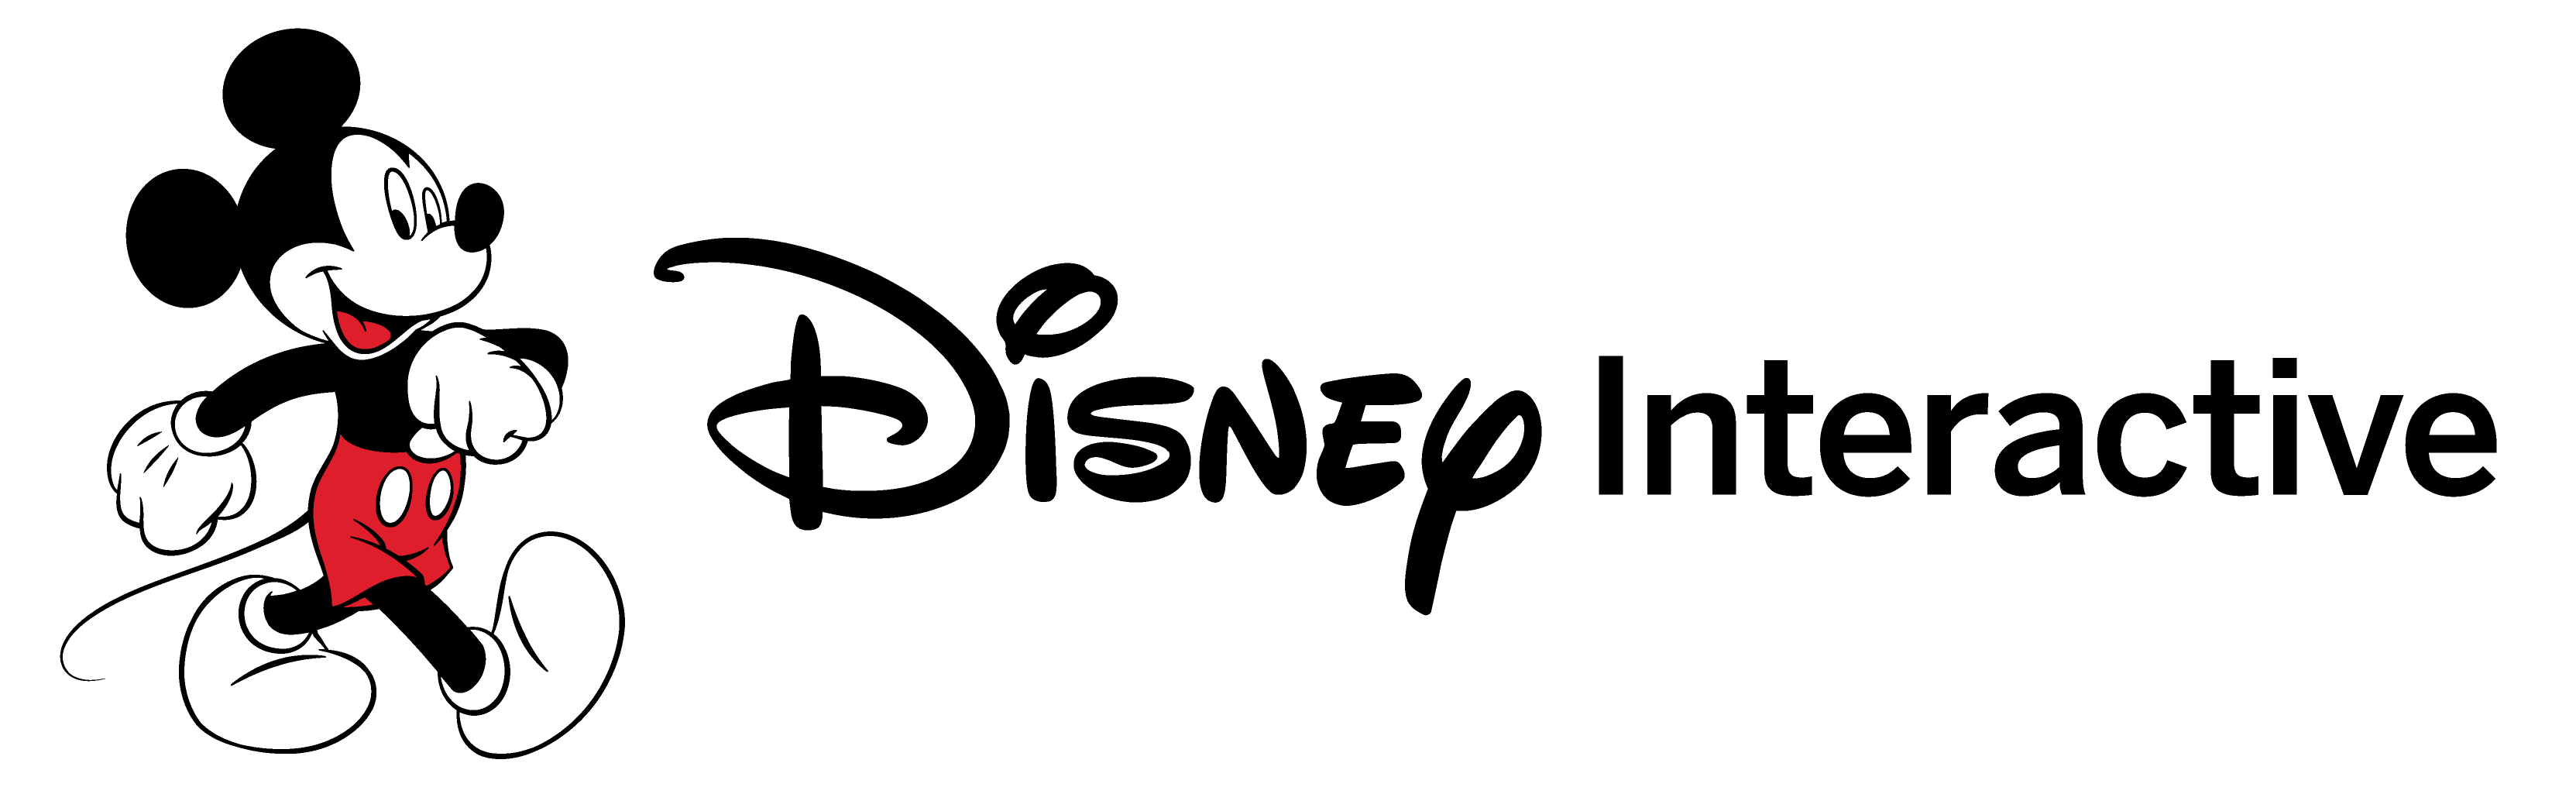 Disney Interactive Logo - Why Disney Abandoned Video Games Walt Disney Company NYSE:DIS